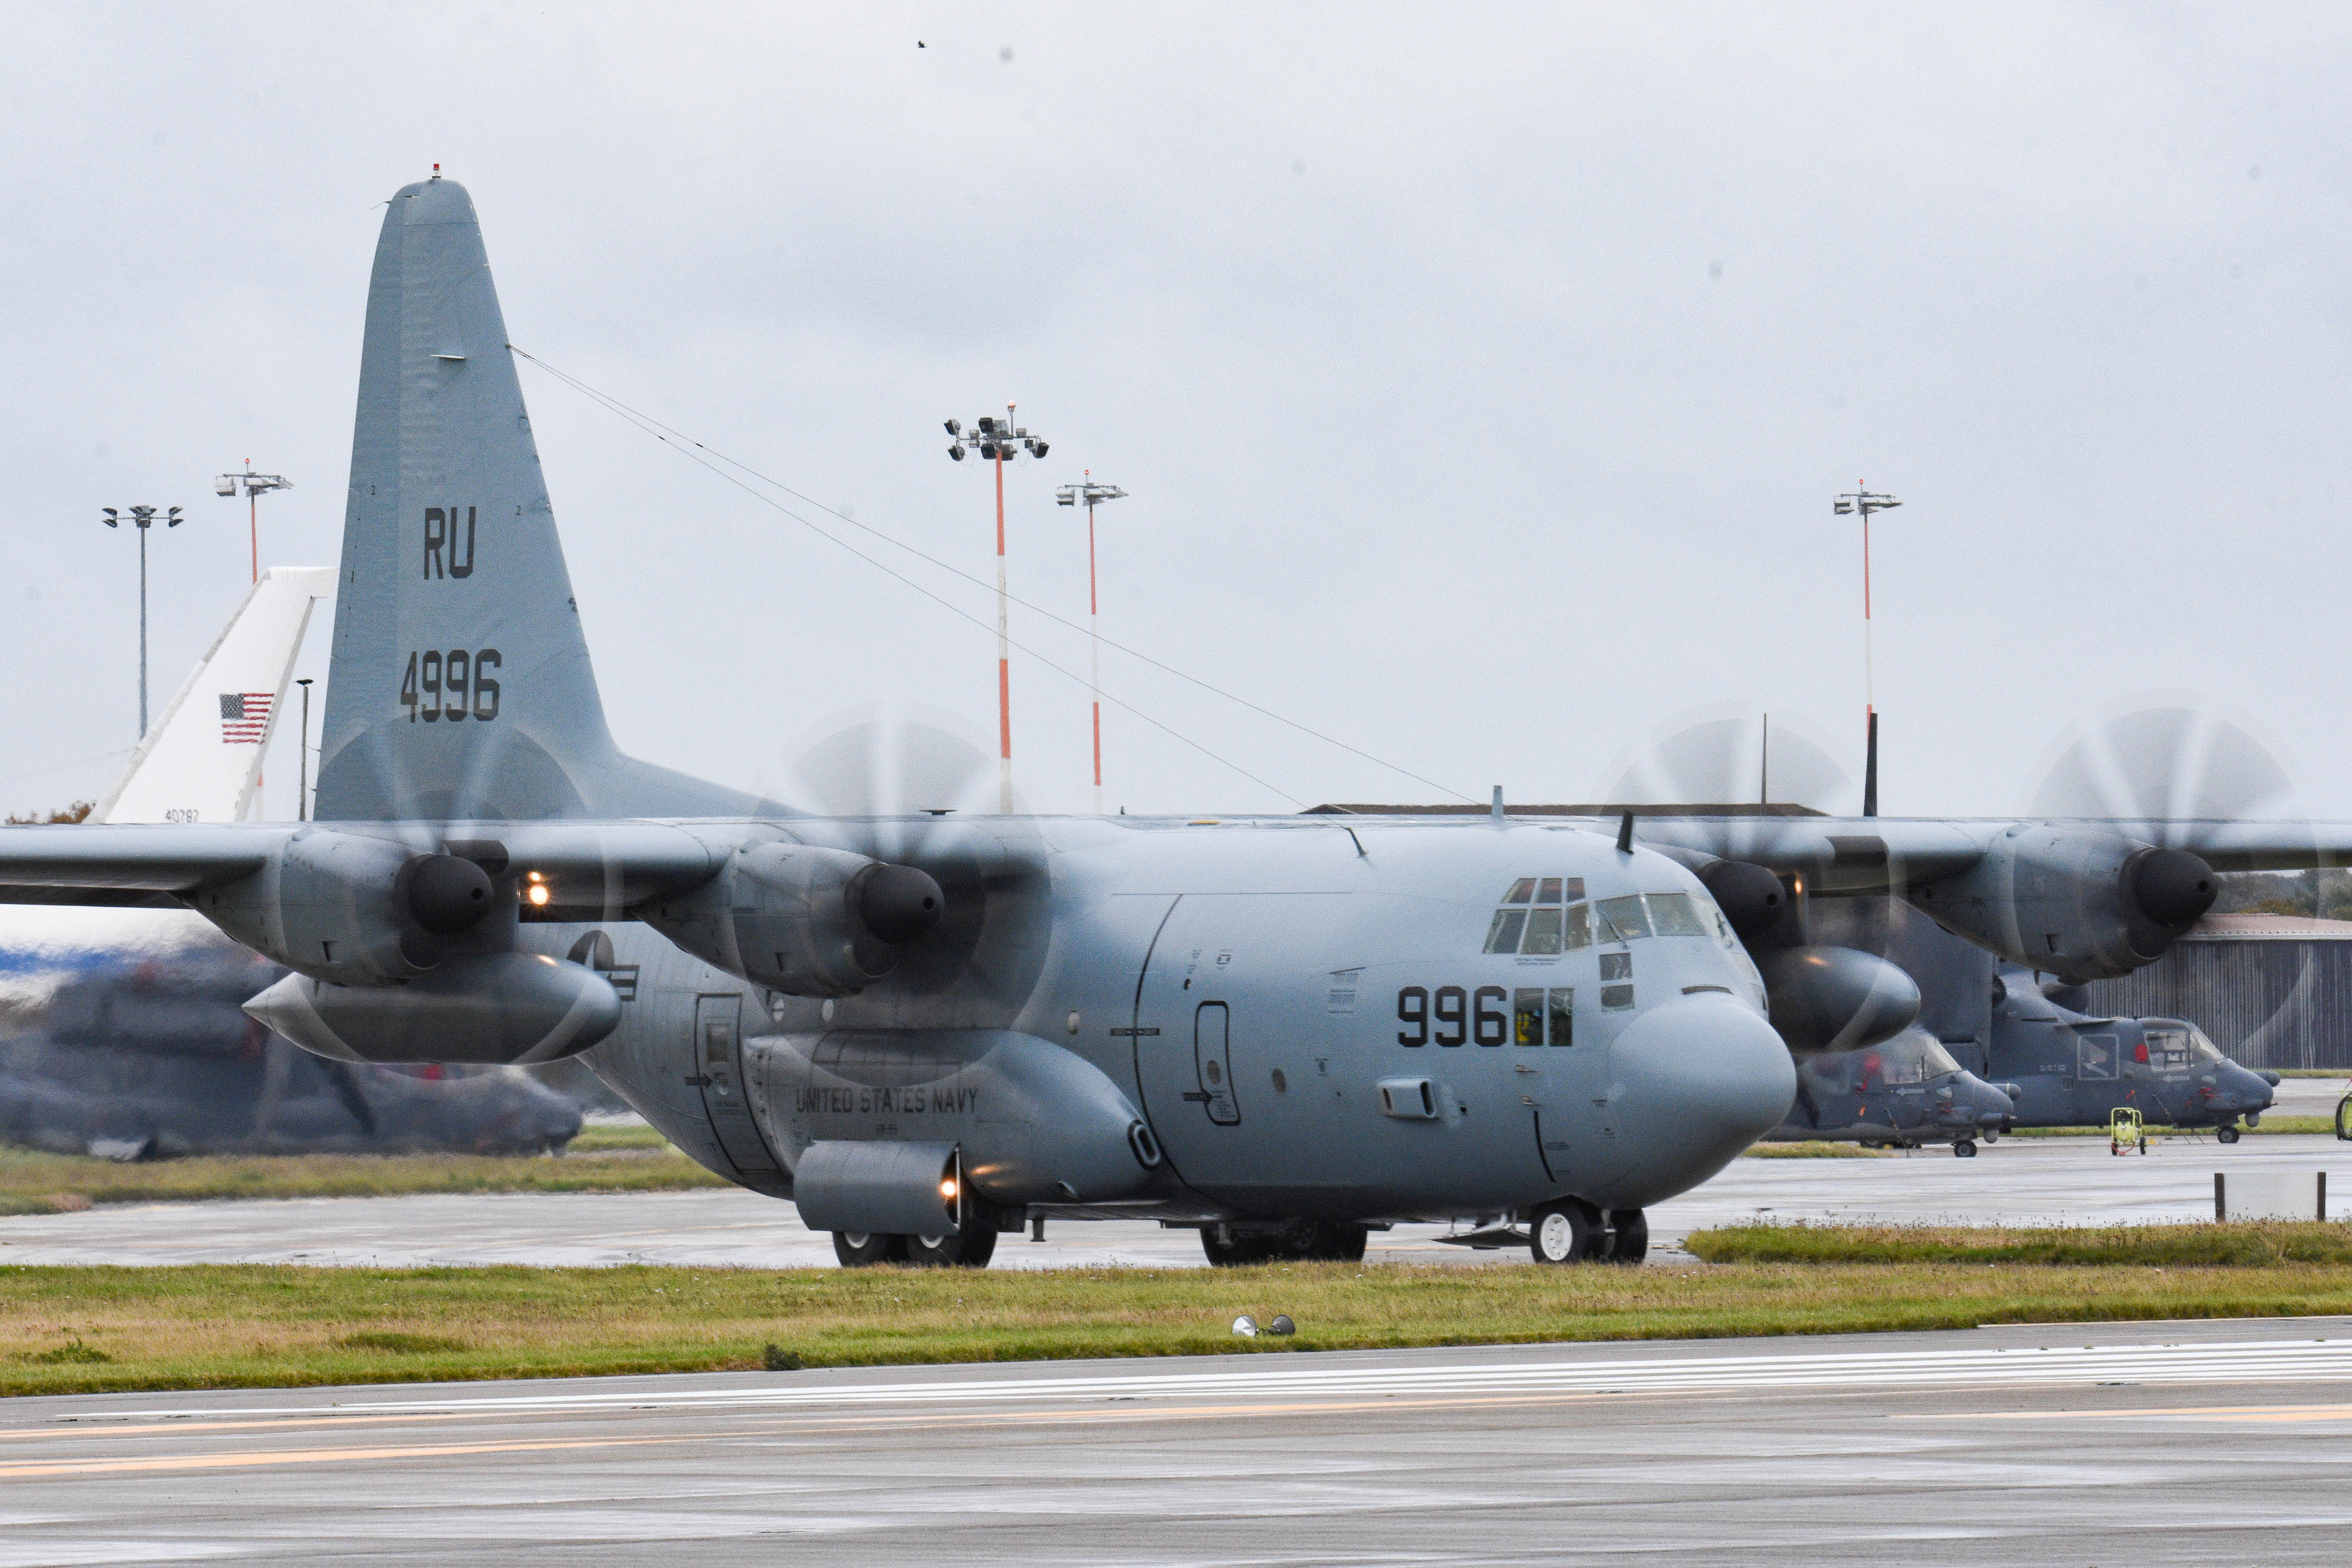 164996/164996 USN - United States Navy Lockheed C-130 Hercules Airframe Information - AVSpotters.com